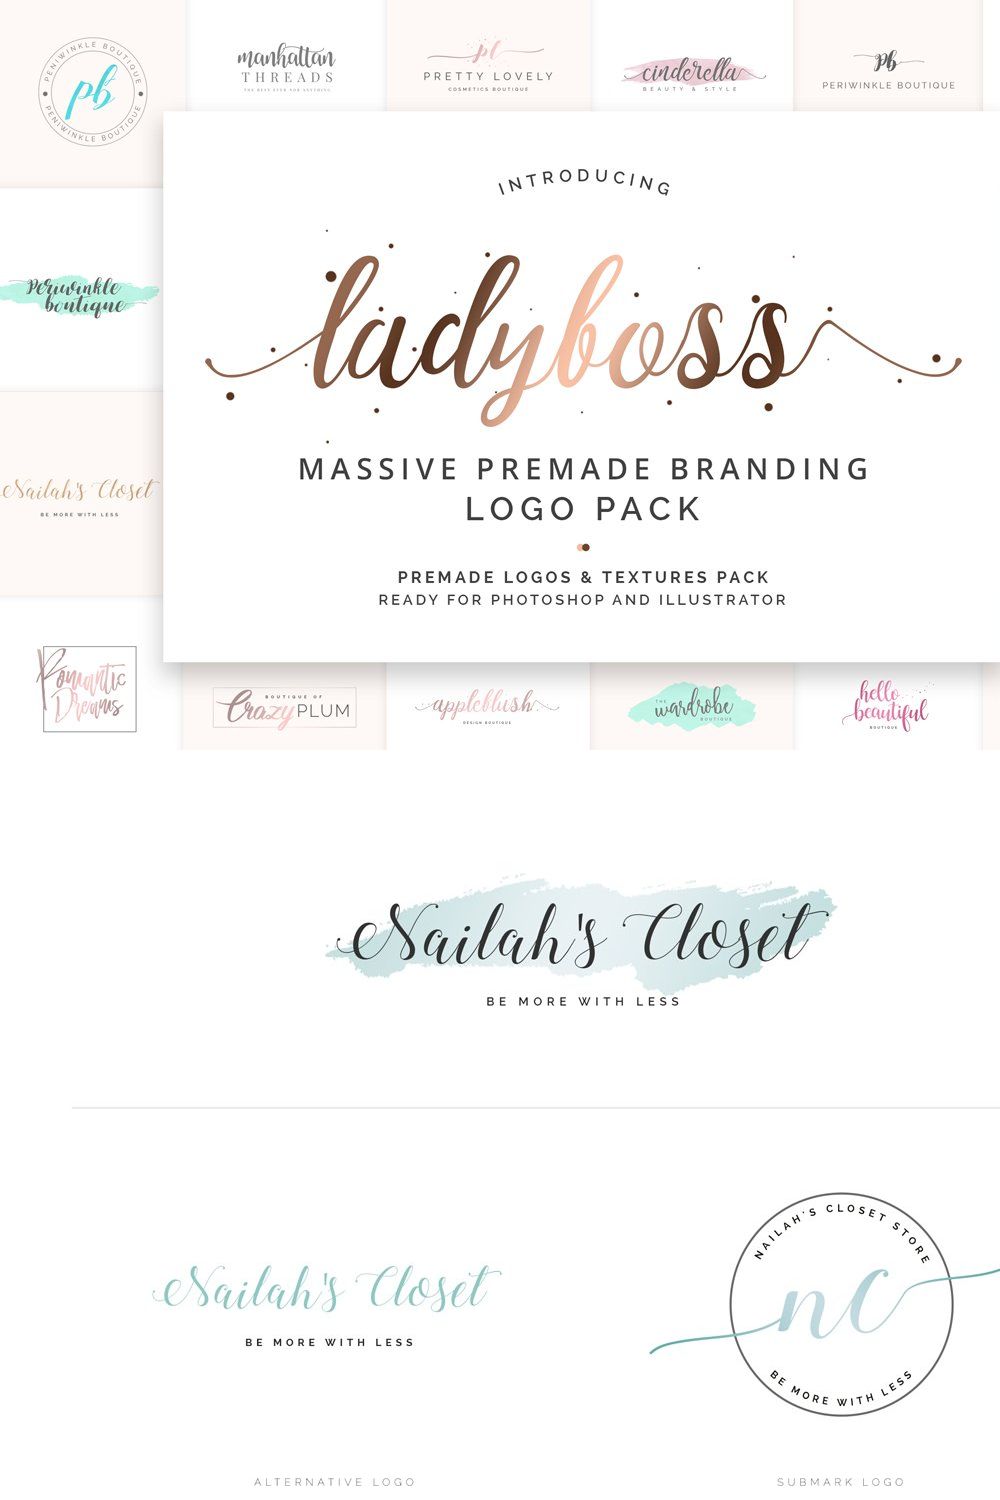 Ladyboss Premade Branding Logos pinterest preview image.